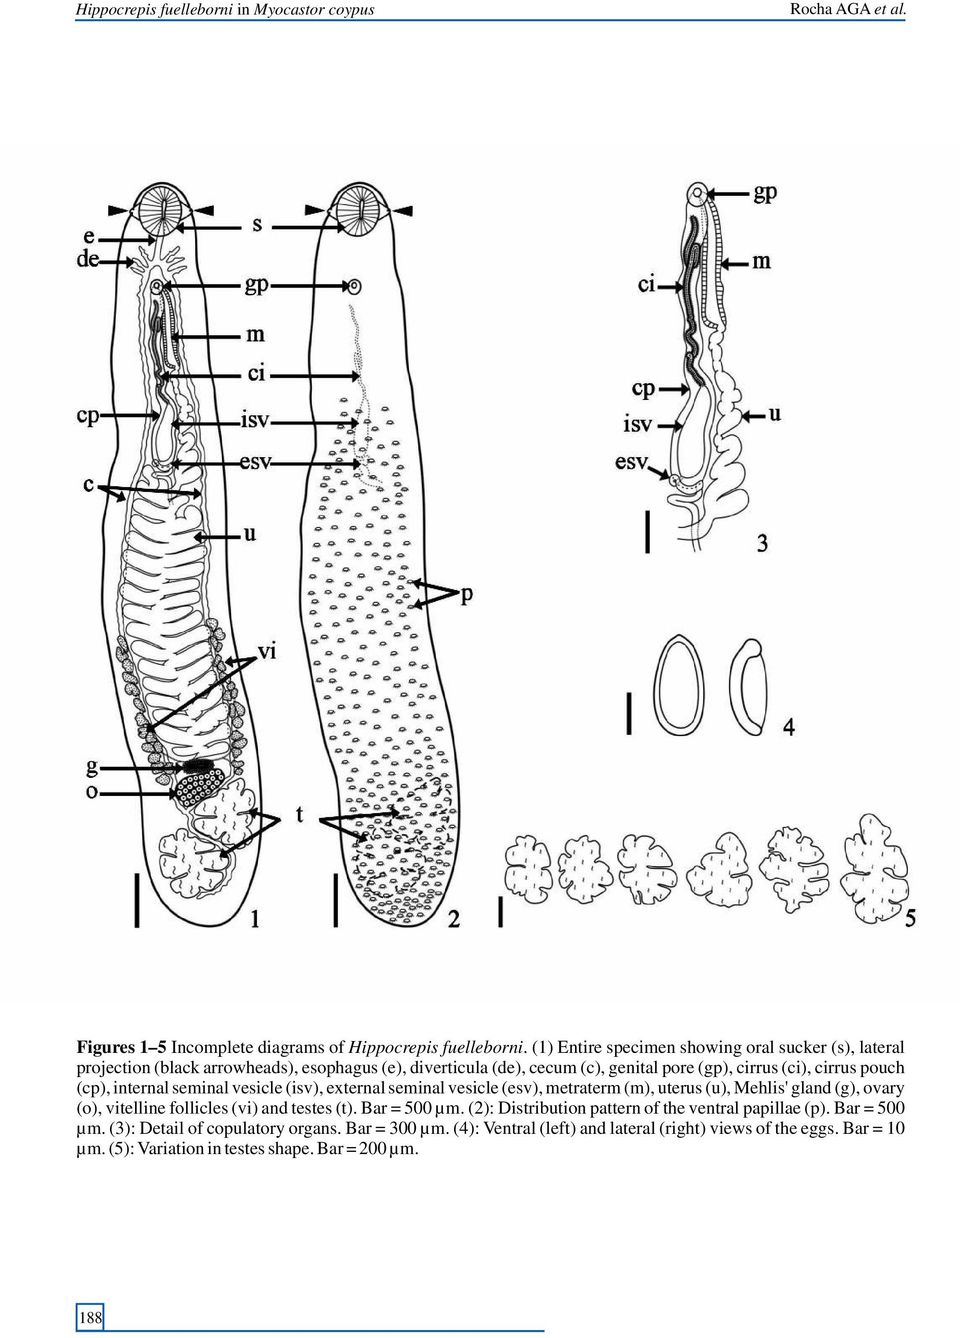 internal seminal vesicle (isv), external seminal vesicle (esv), metraterm (m), uterus (u), Mehlis' gland (g), ovary (o), vitelline follicles (vi) and testes (t). Bar = 500 µm.